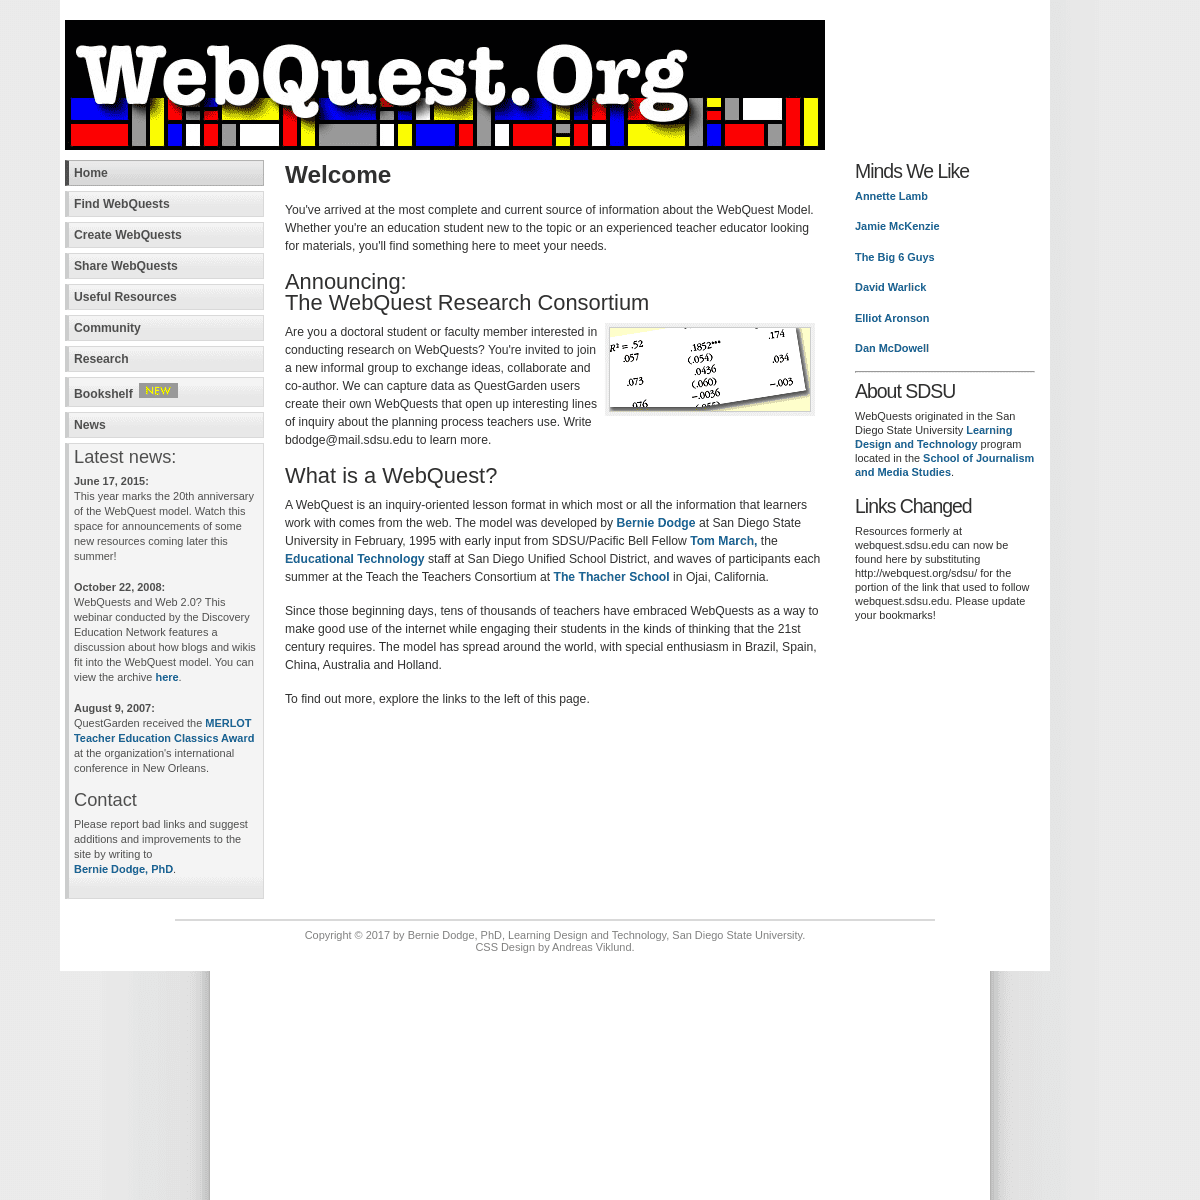 A complete backup of https://webquest.org